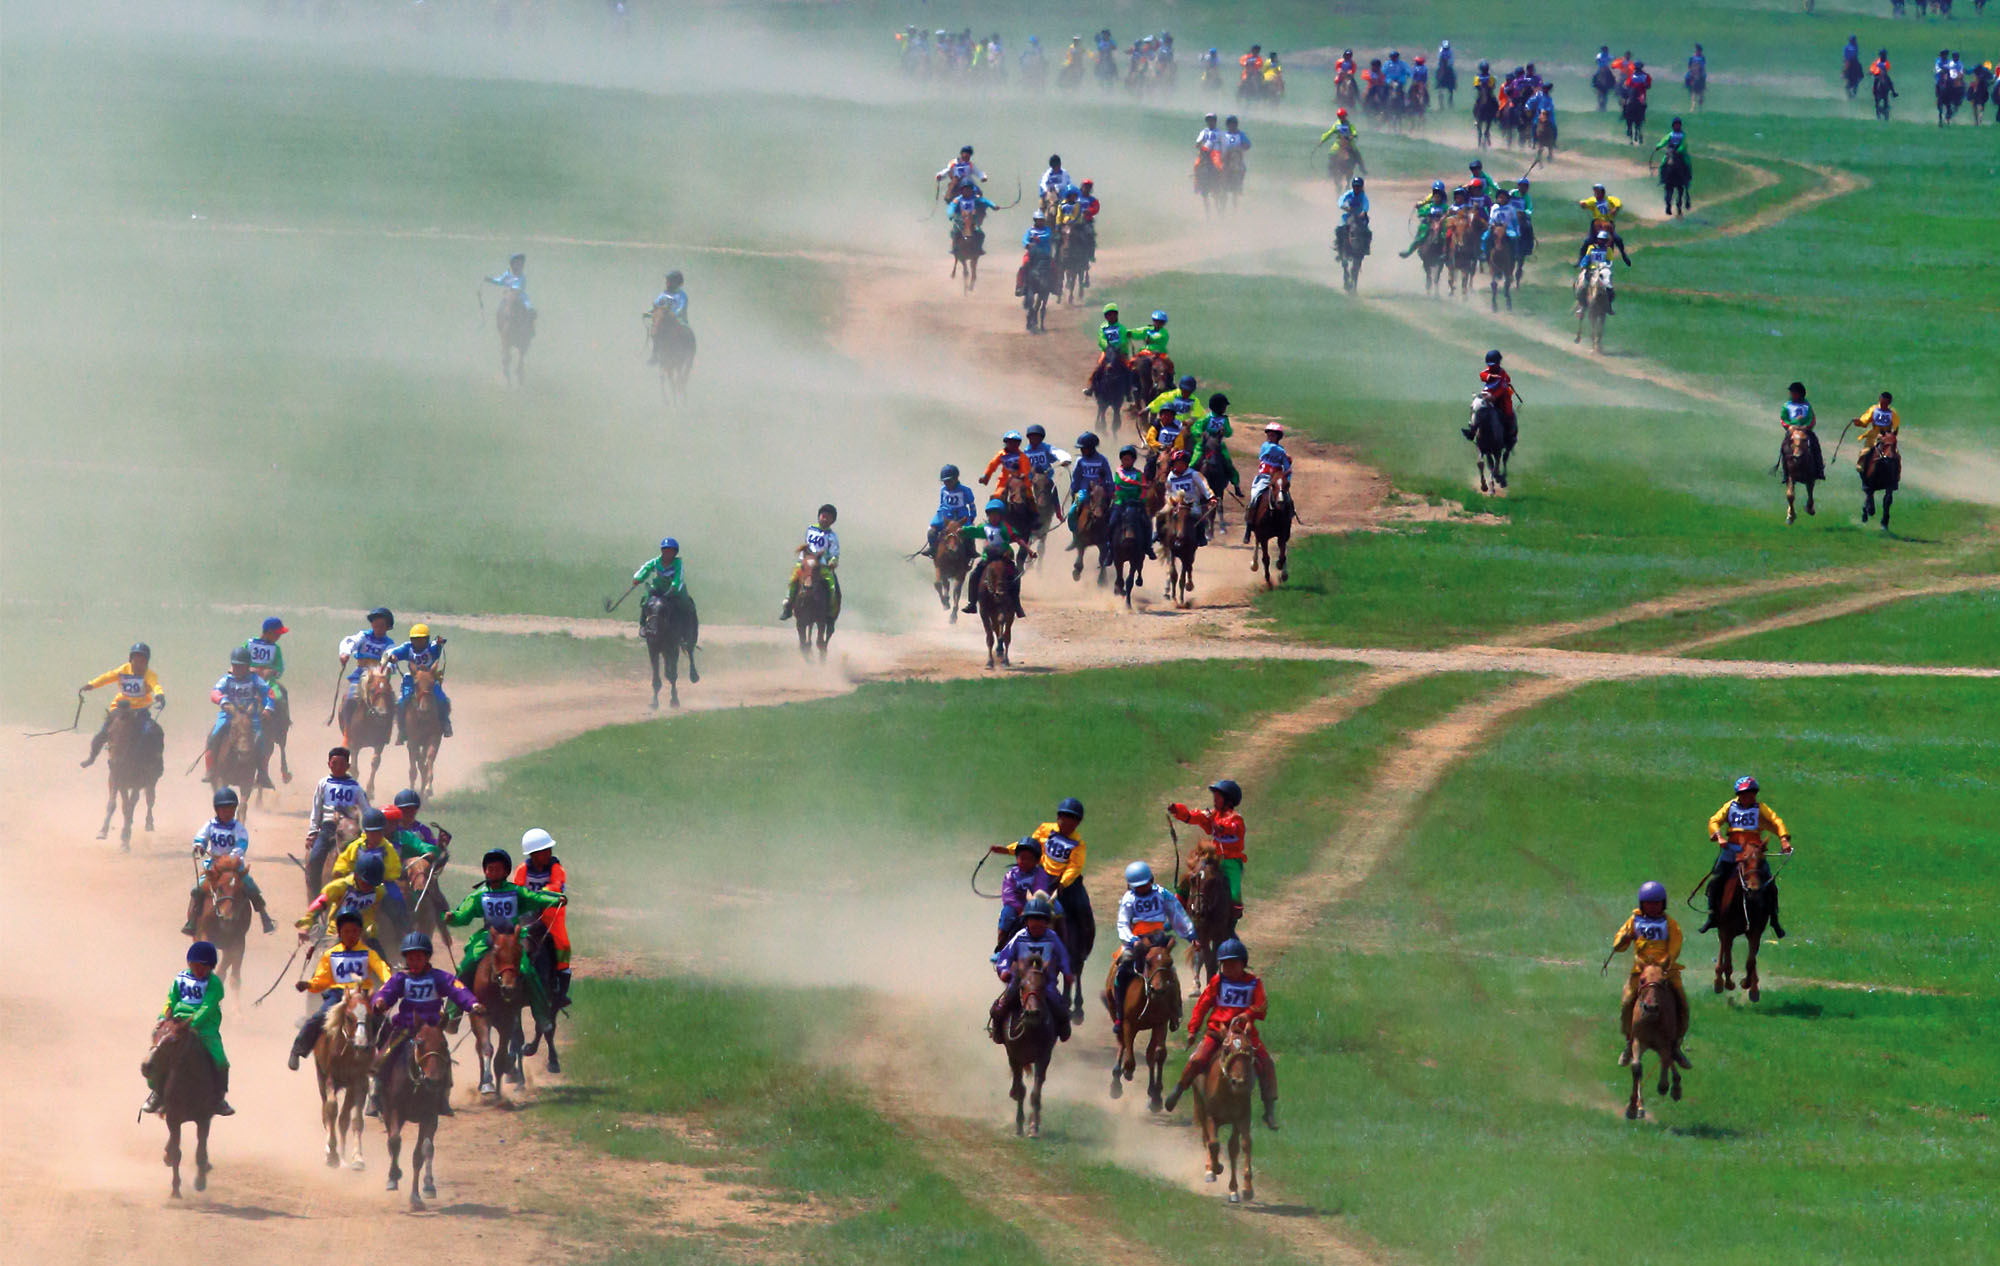 Horse Racing in Naadam Festival, Mongolia